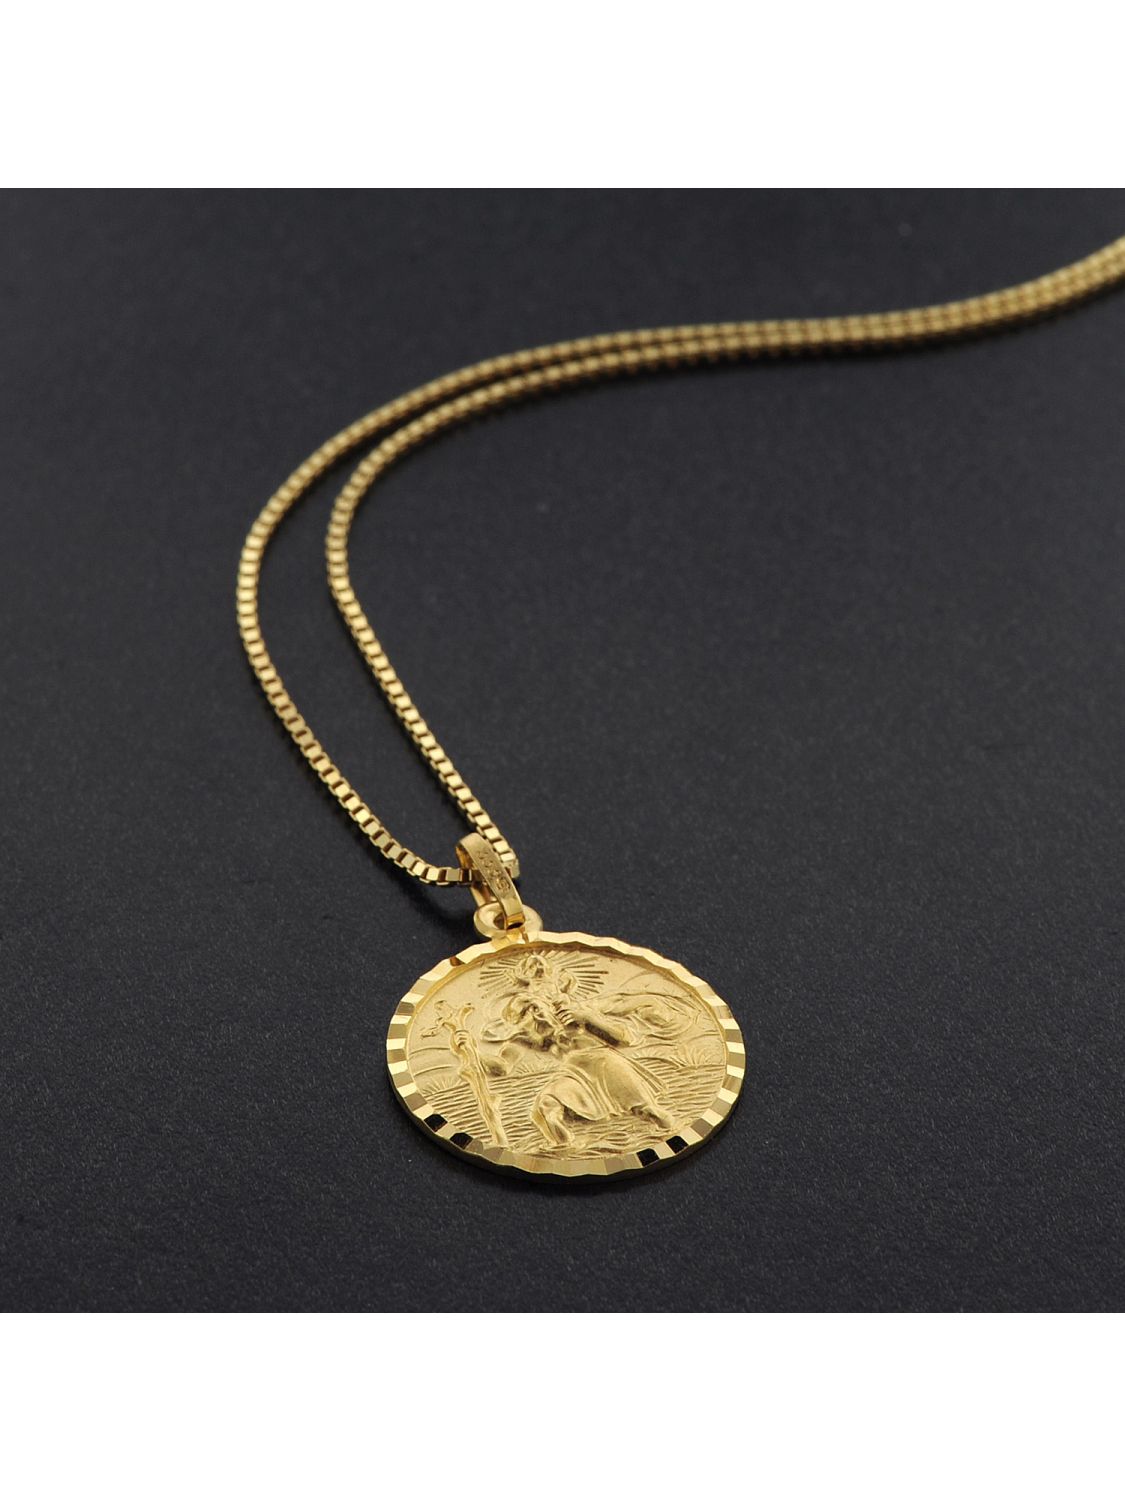 Saint Christophorus Pendant Genuine Gold3338k With Silver Gold